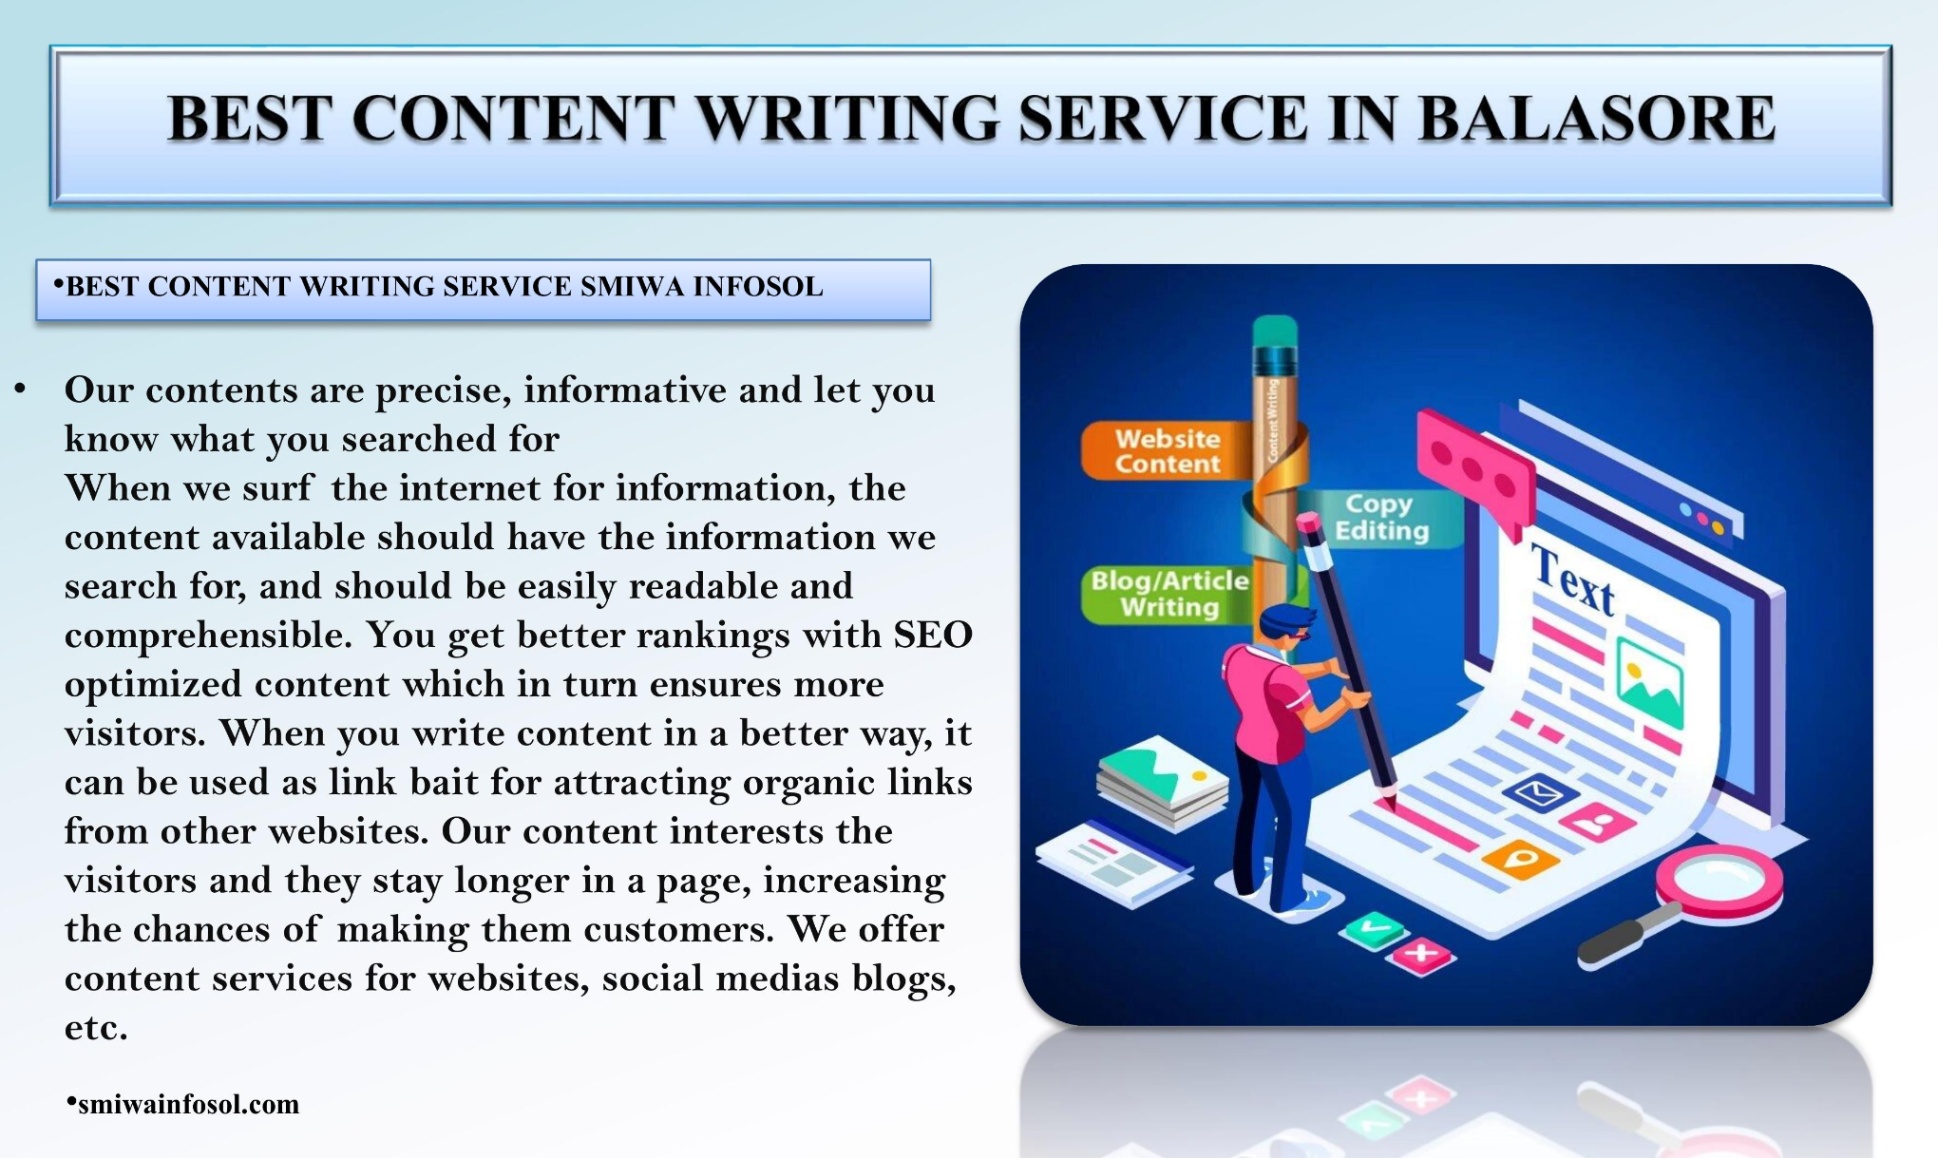 Balasore Best Content Writing Service provider in Balsore odisha